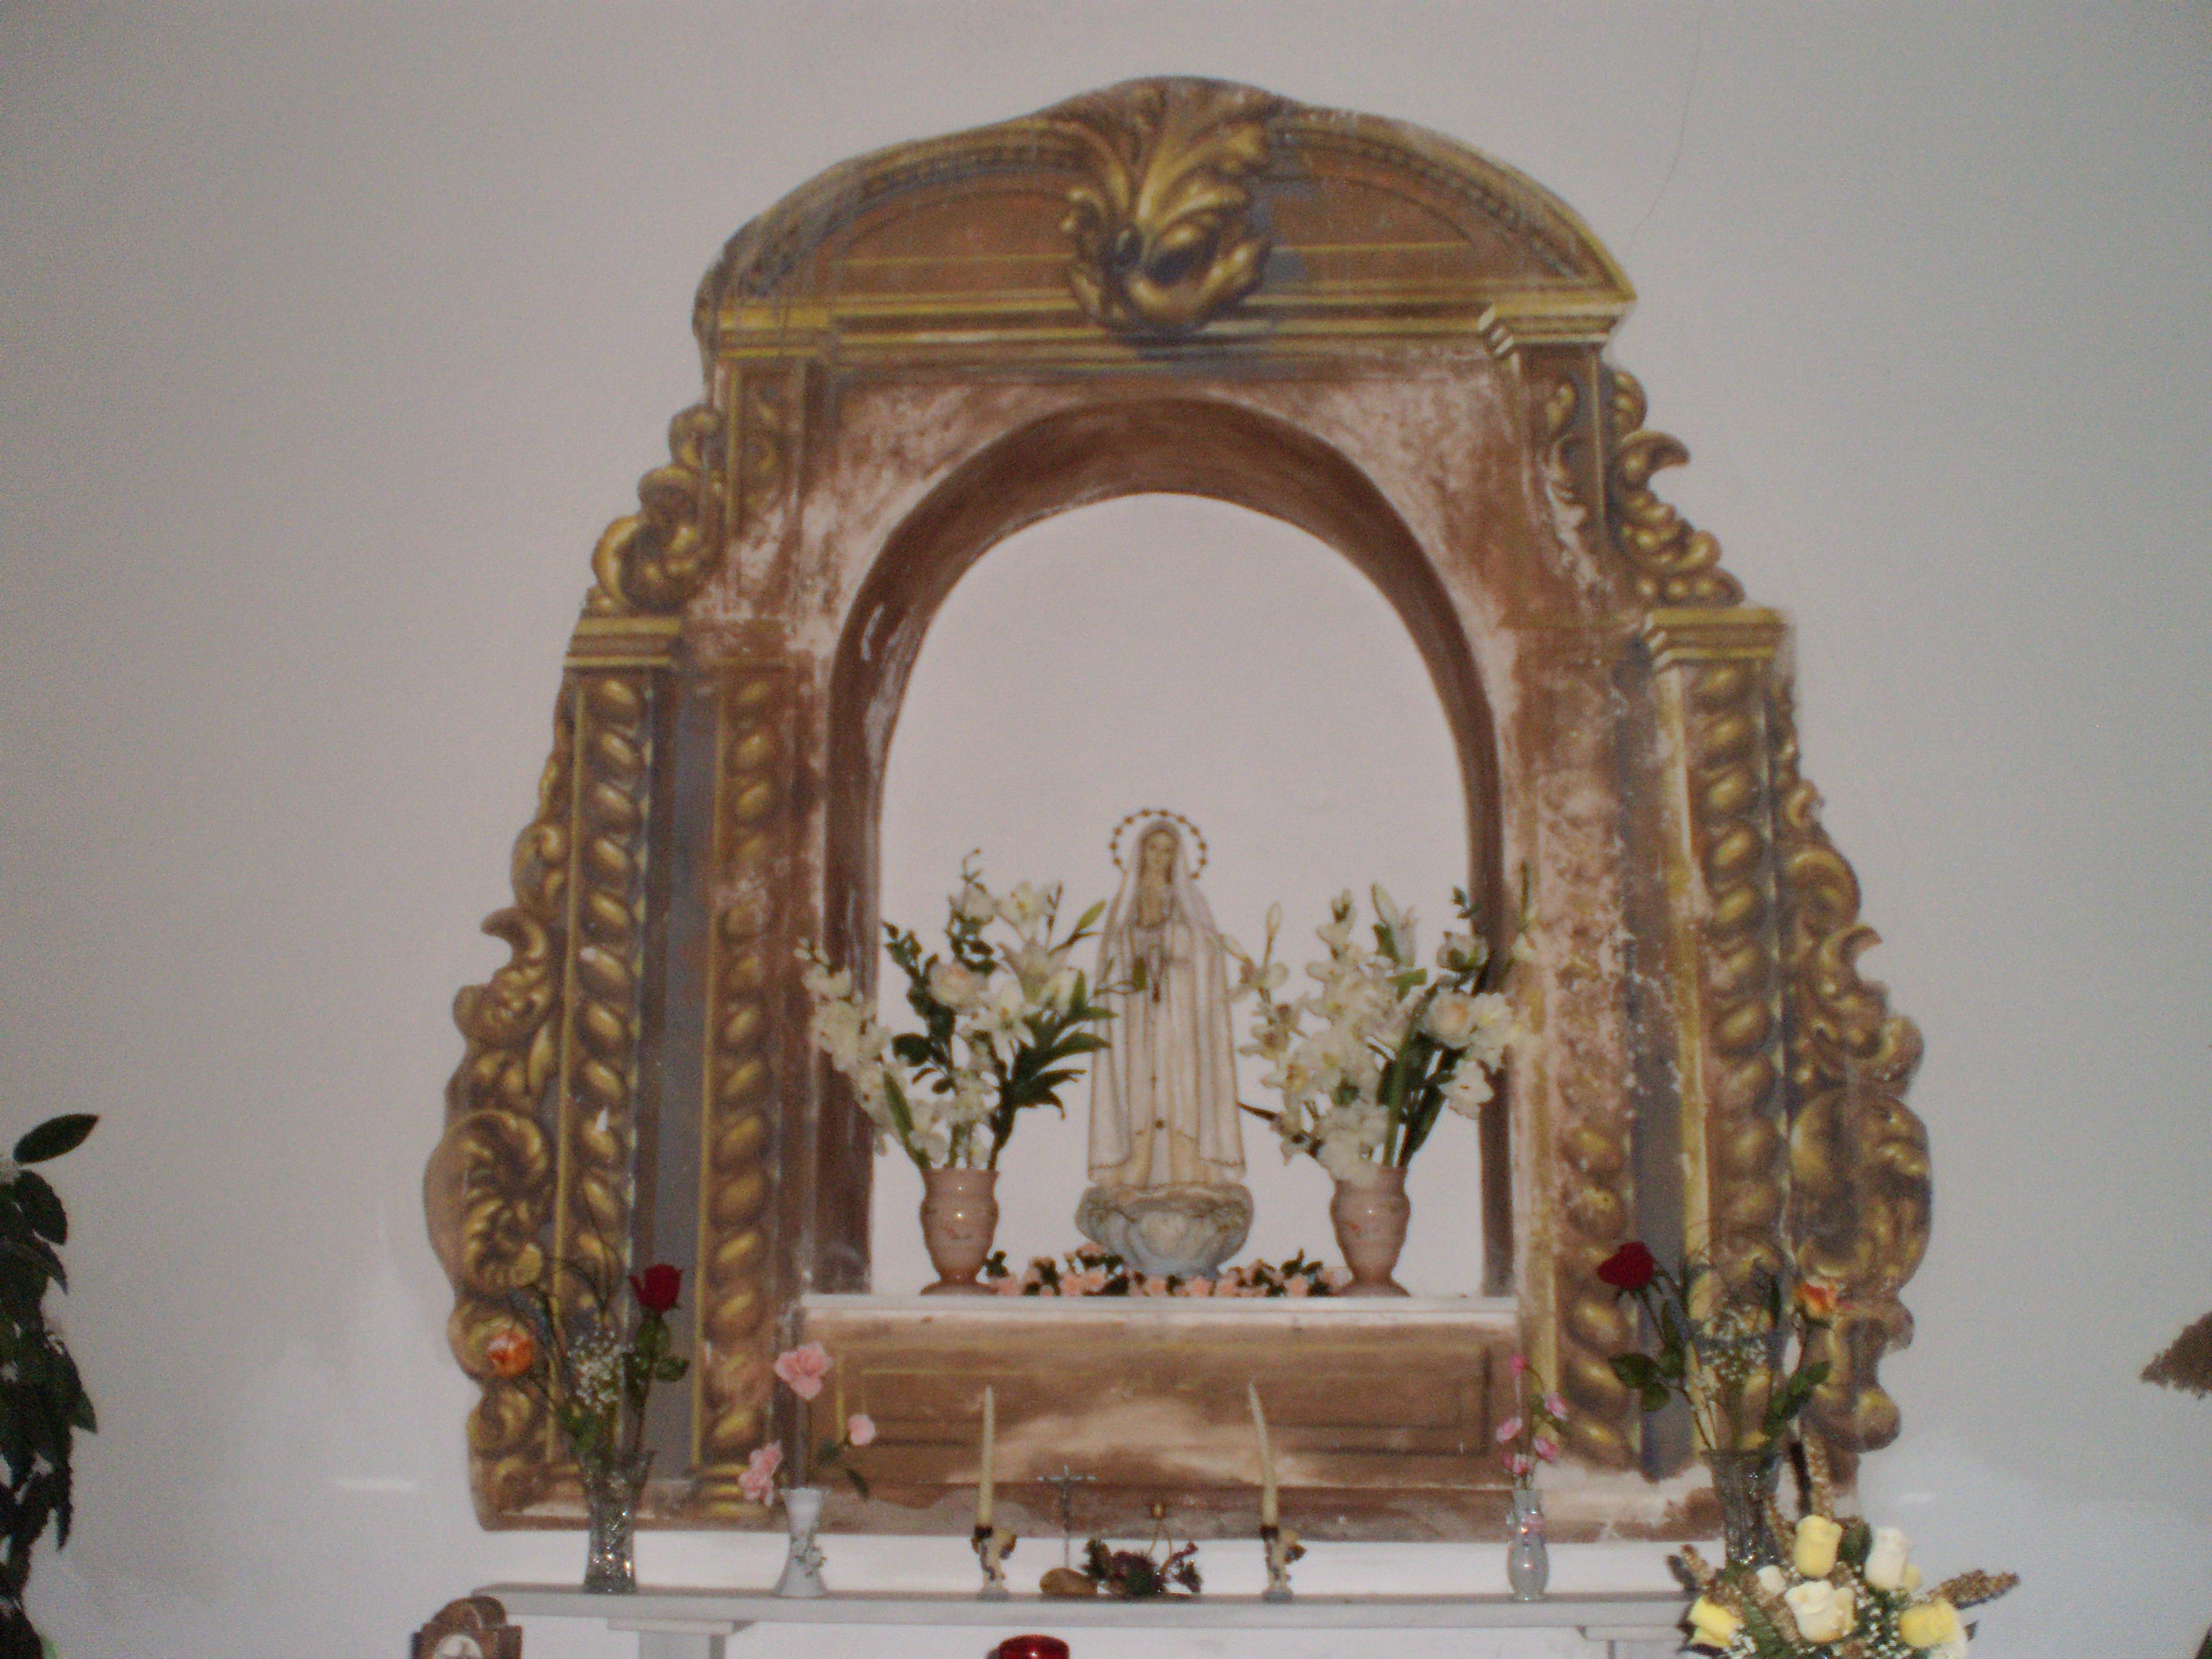 Virgen de Fátima.jpg